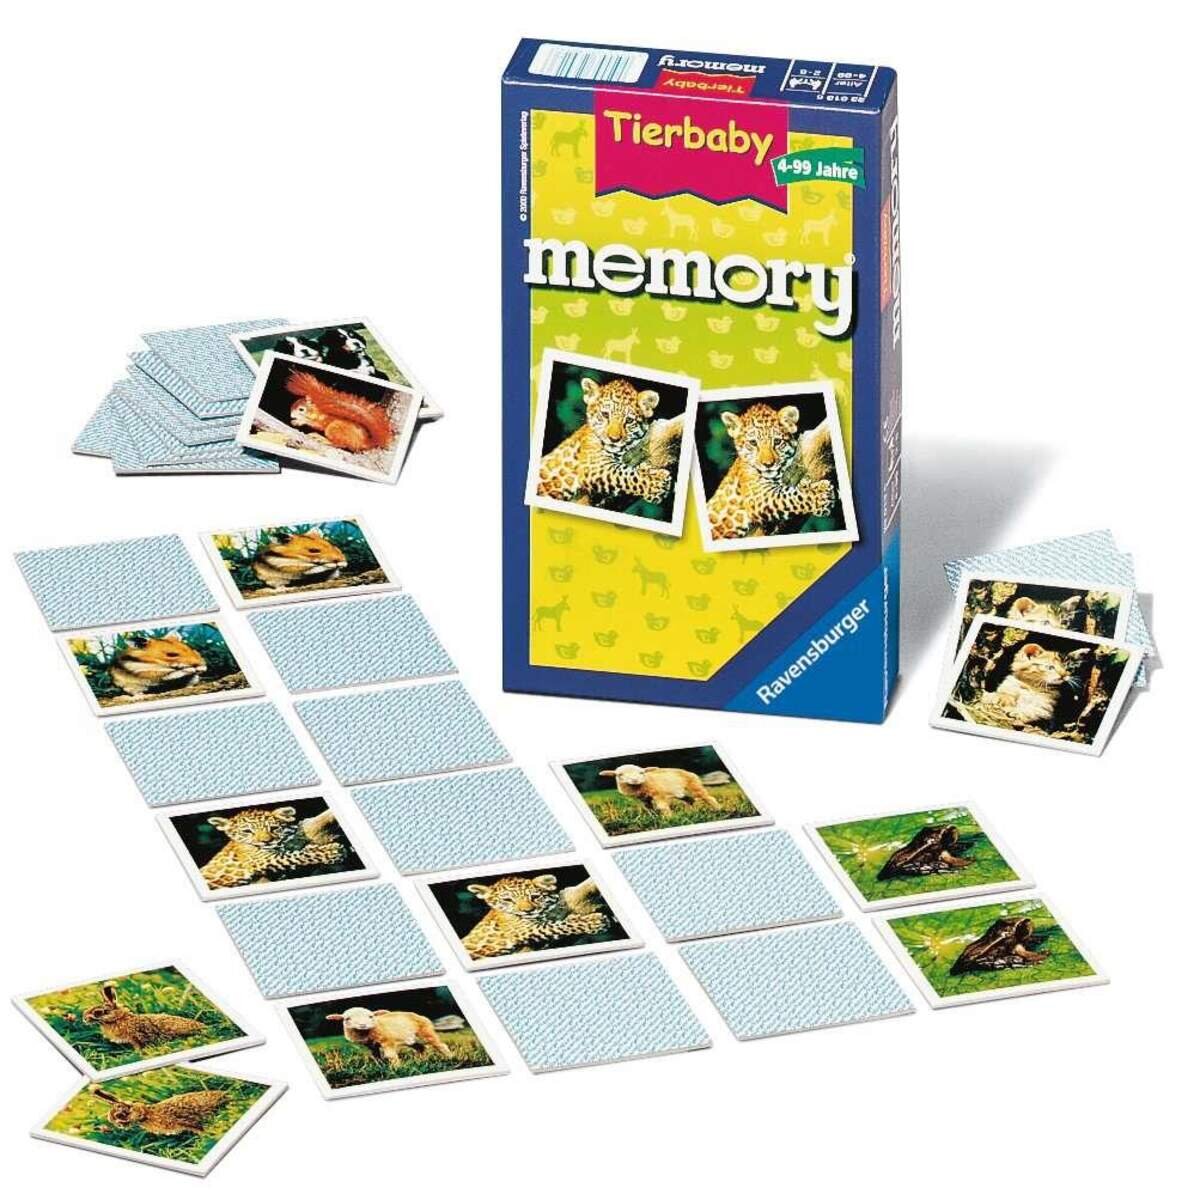 Ravensburger Tierbaby memory®